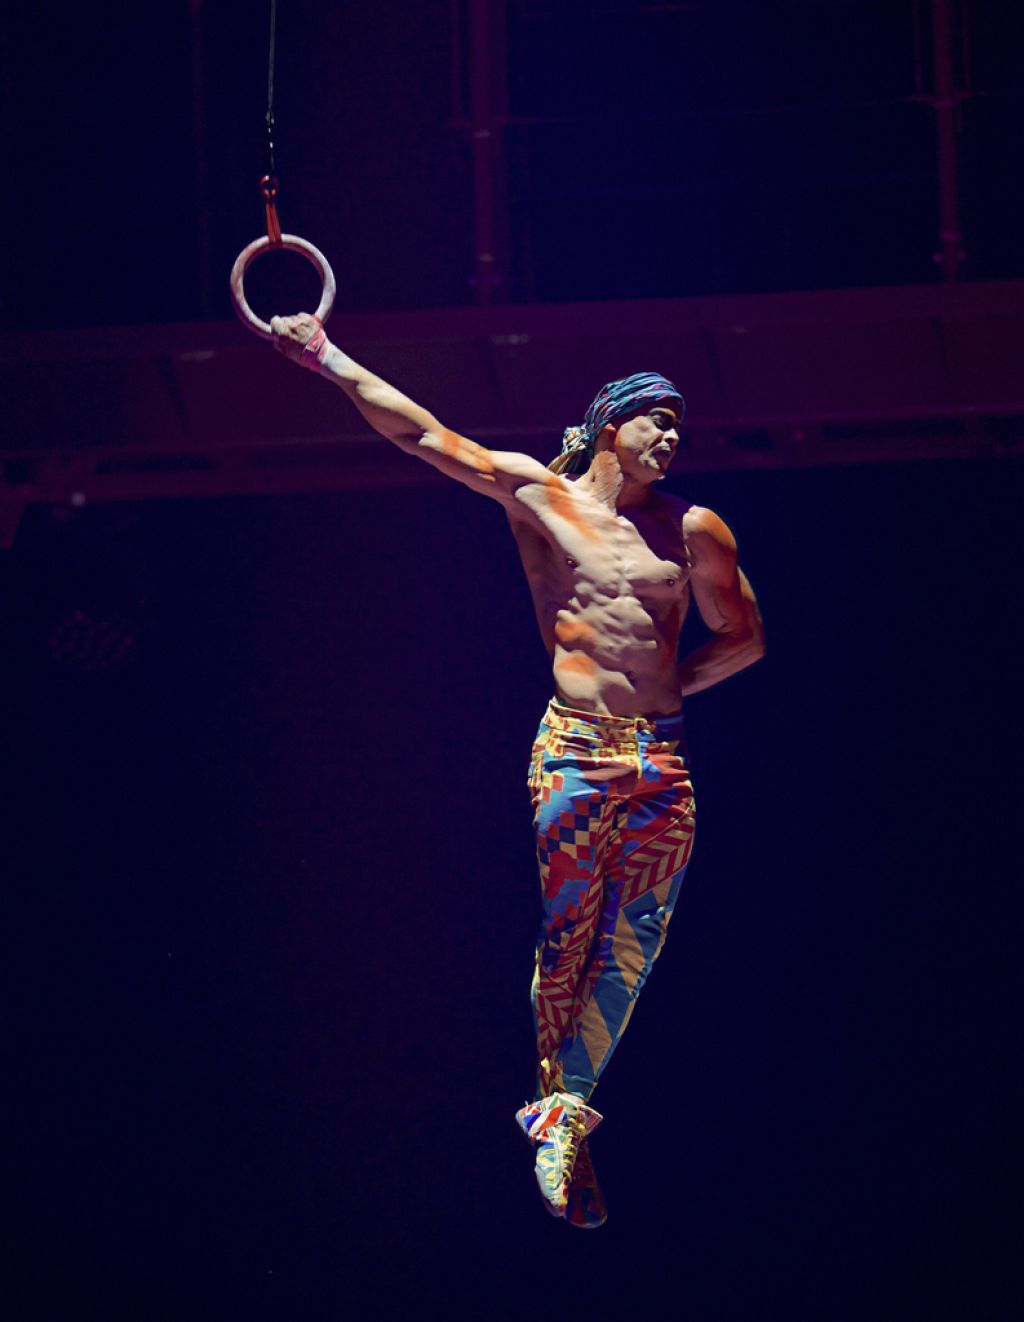 Predstava Cirque du Soleil usodna za akrobata Yanna Arnauda